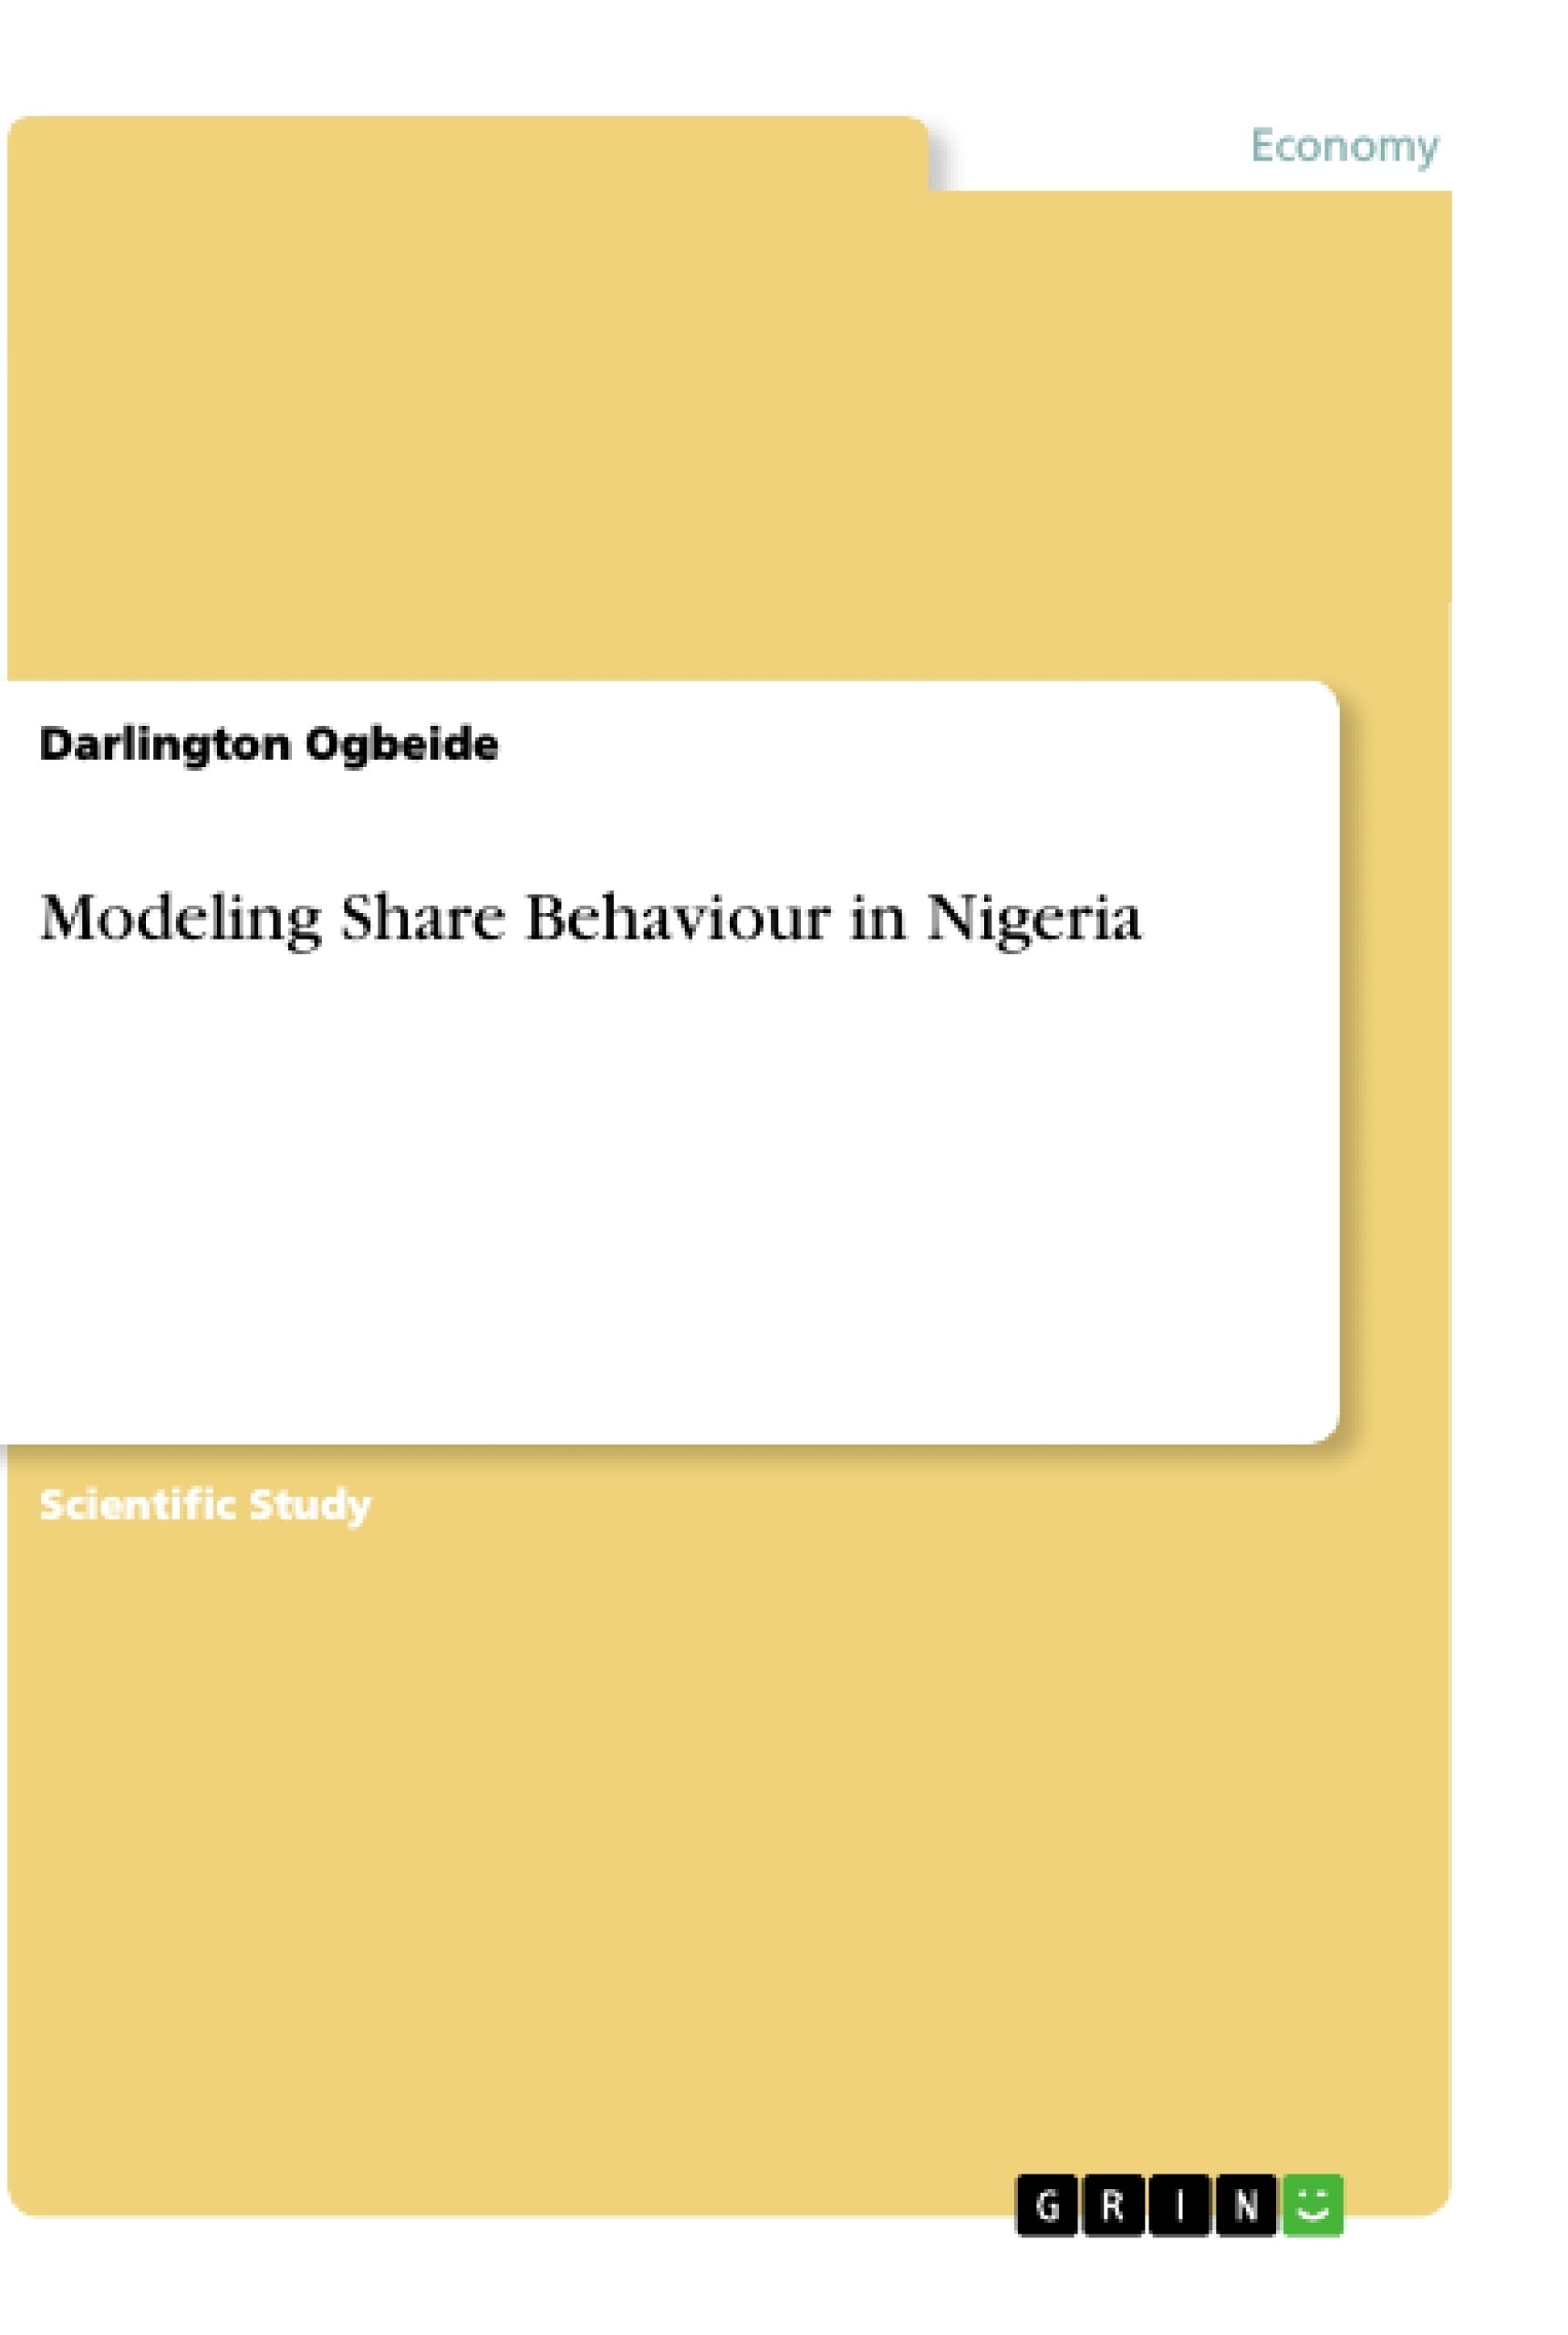 Titre: Modeling Share Behaviour in Nigeria